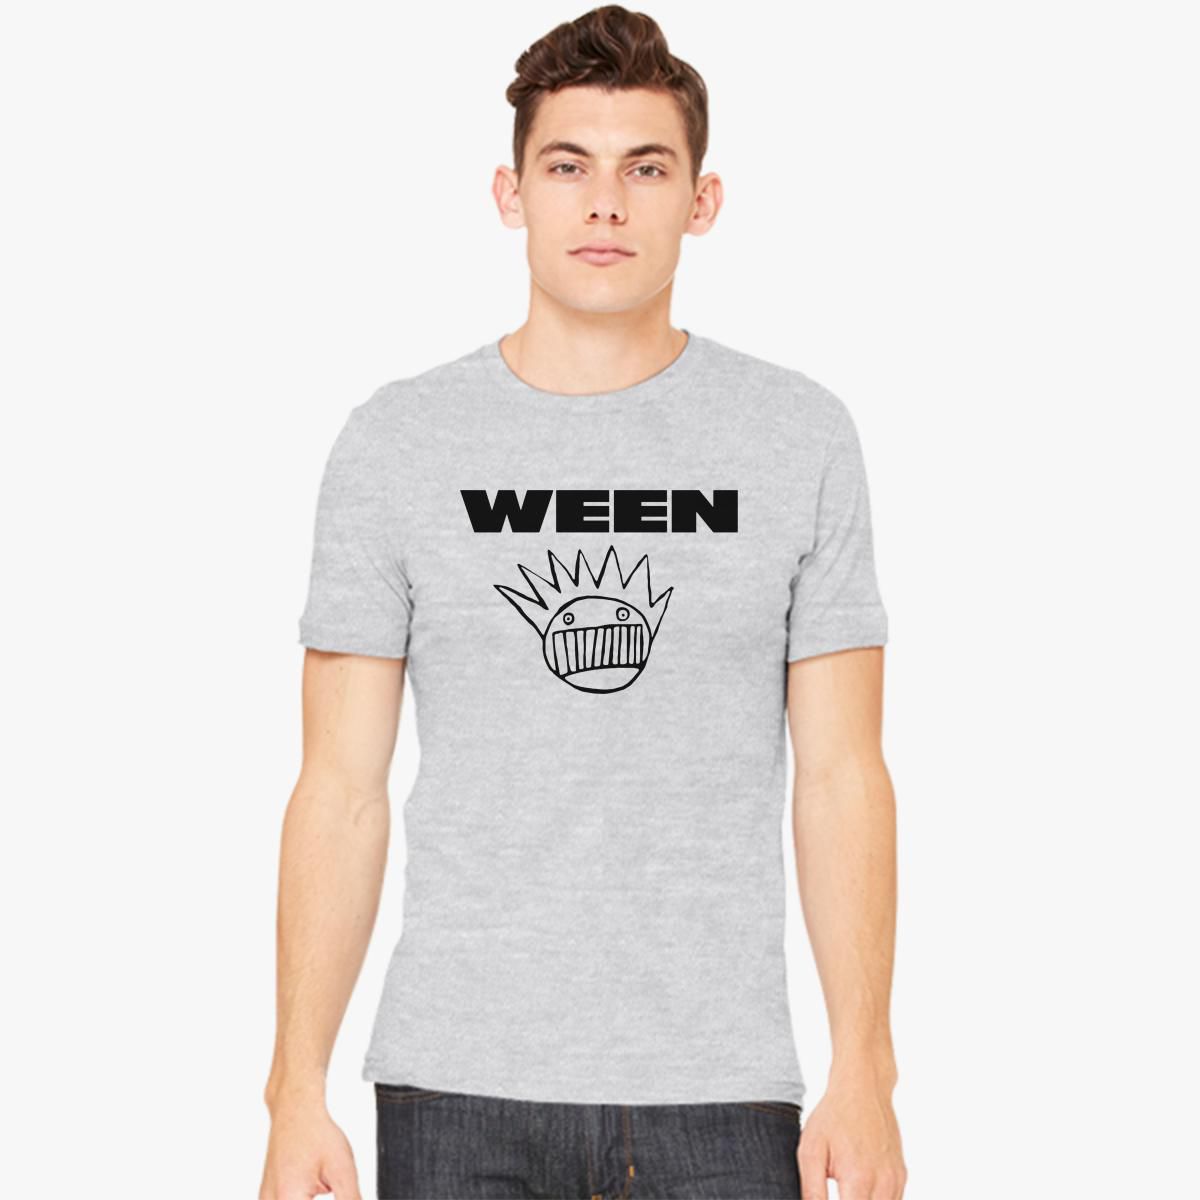 Ween Band Logo Men's Tshirt Customon